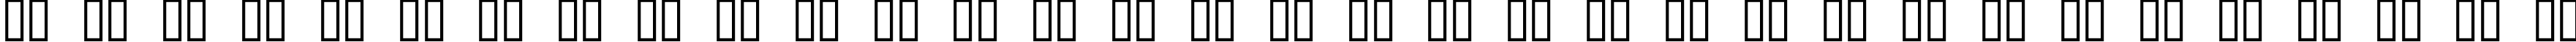 Пример написания русского алфавита шрифтом monooge 05_55